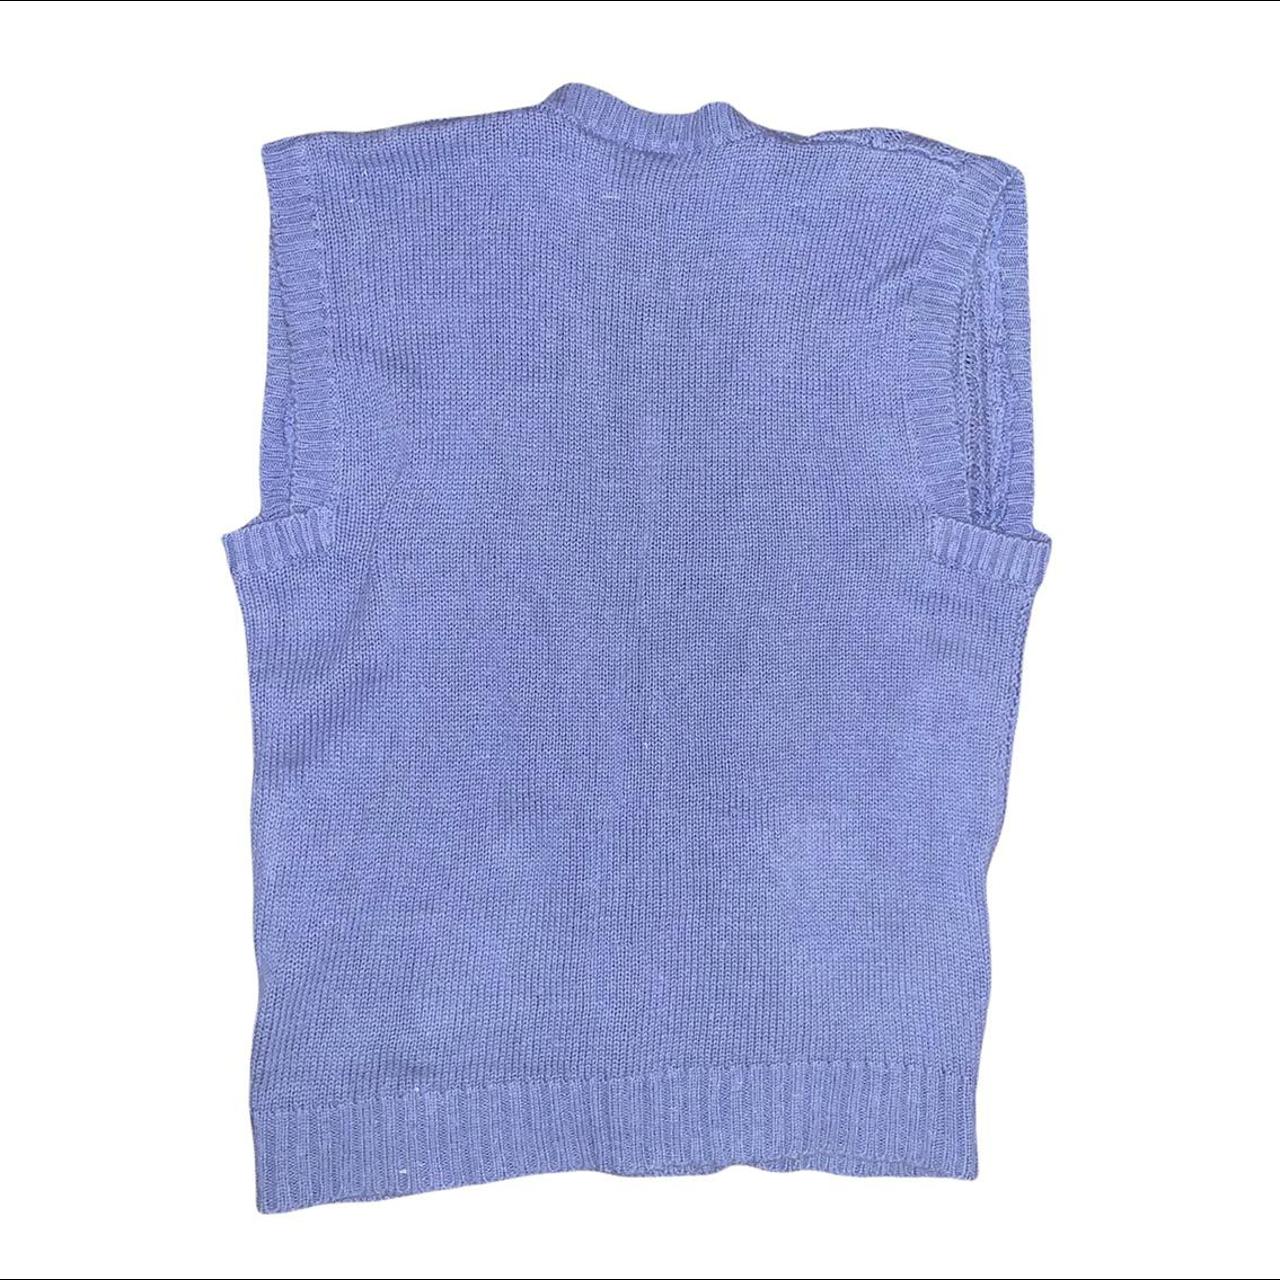 Product Image 2 - Sky Blue Knit Sweater Vest